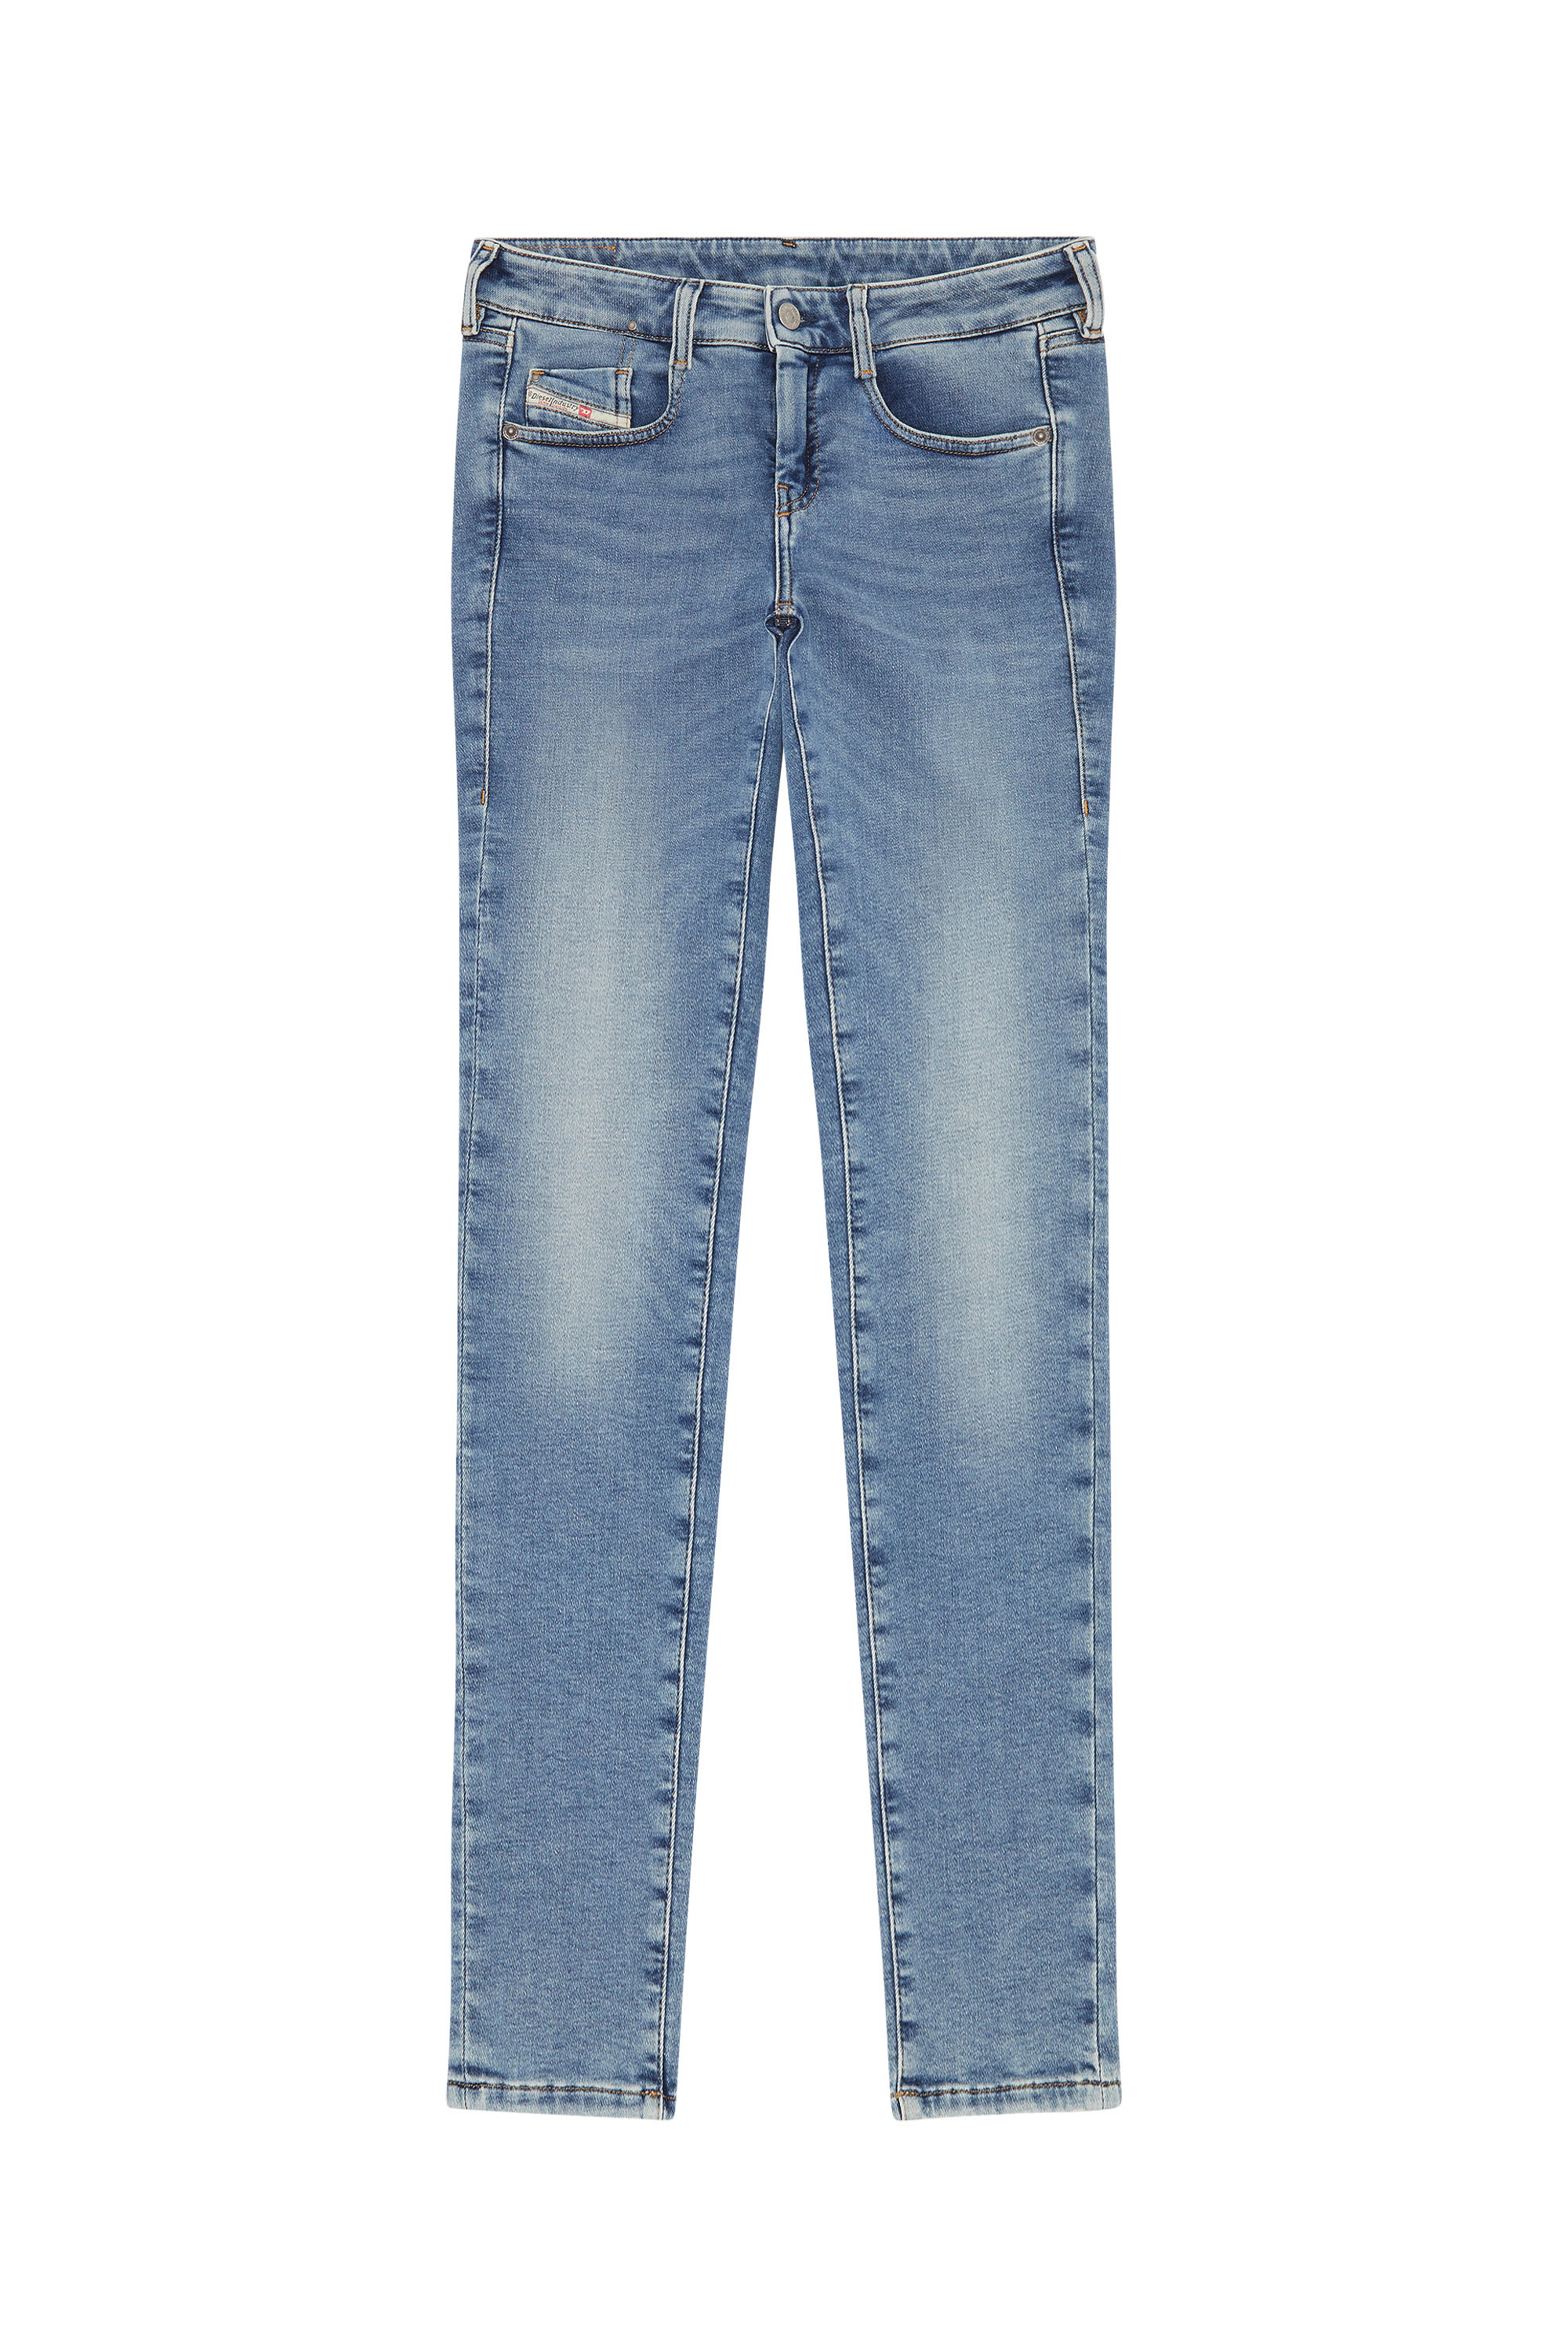 D-Ollies JoggJeans® 068BA Slim, Mittelblau - Jeans